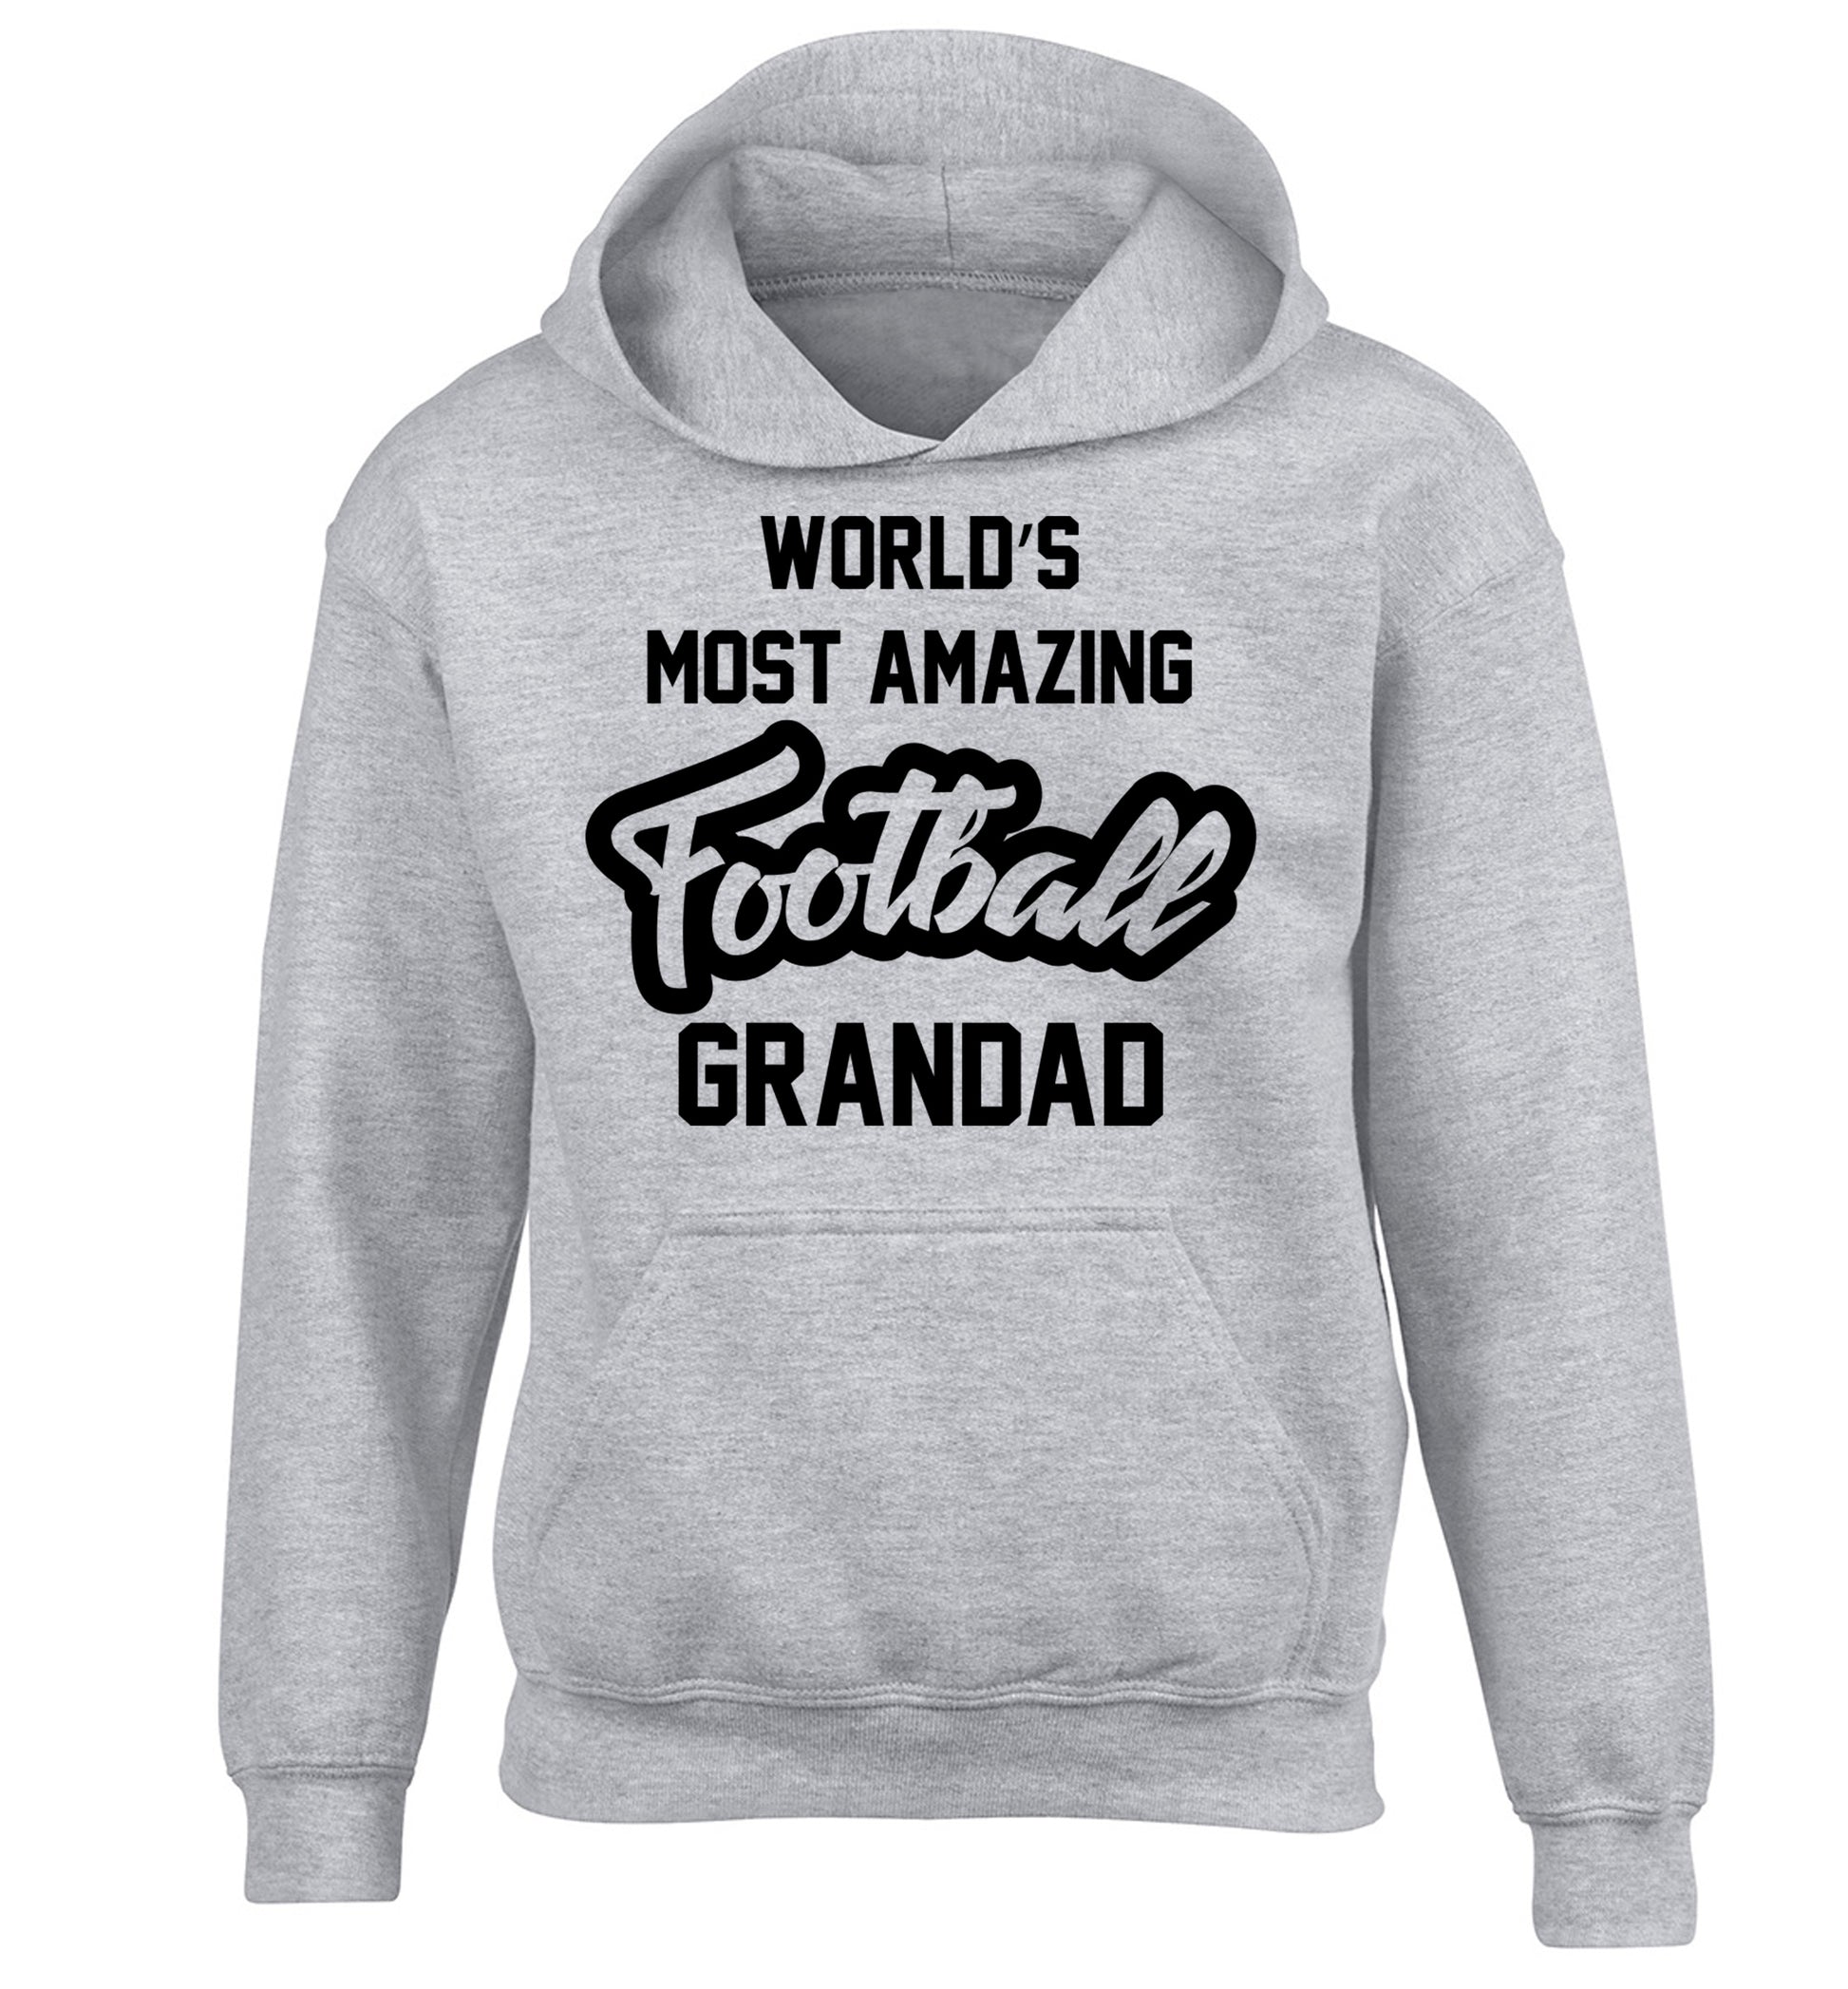 Worlds most amazing football grandad children's grey hoodie 12-14 Years